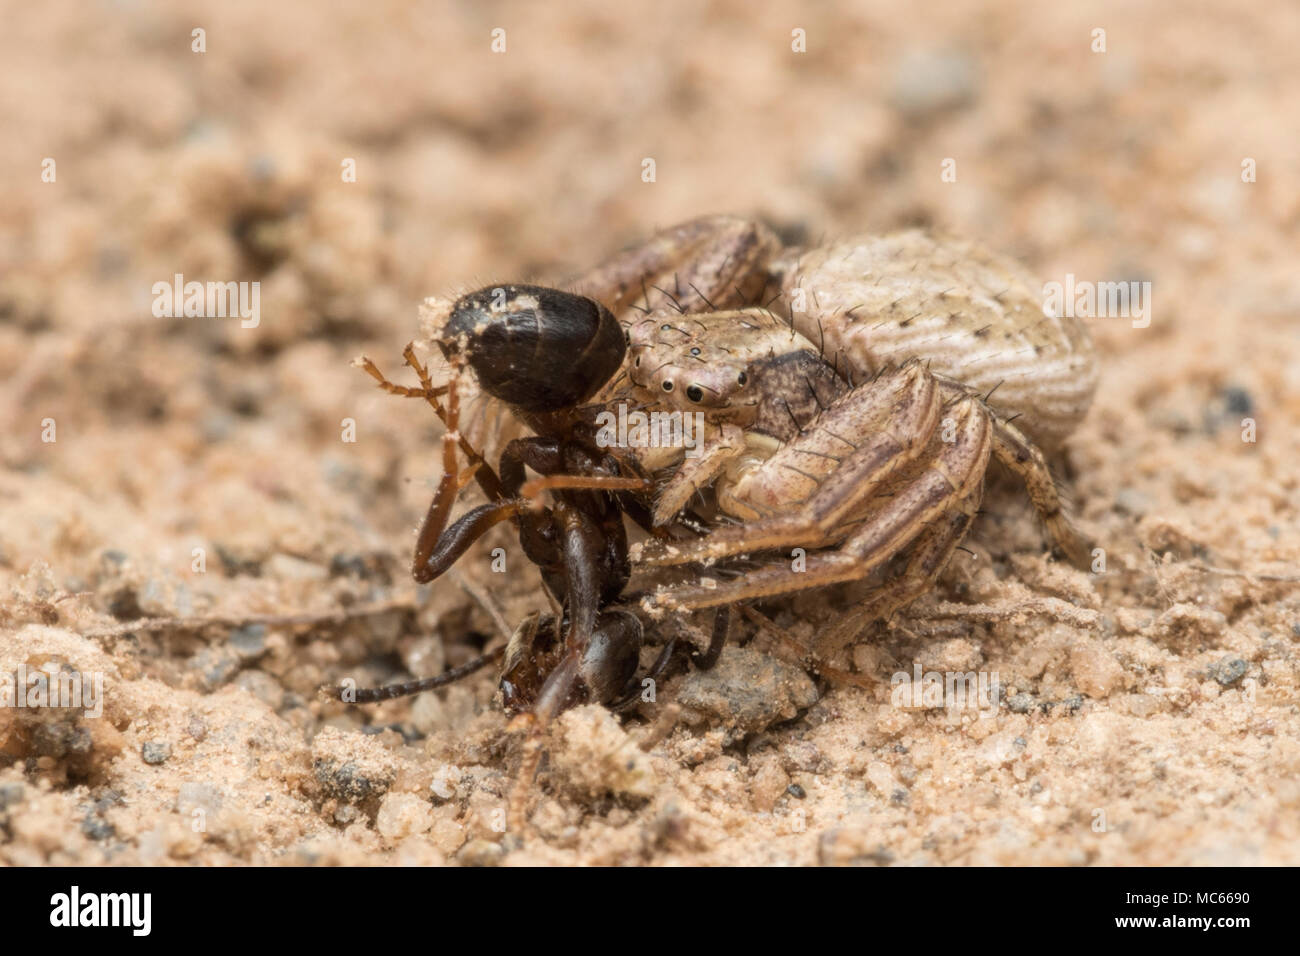 (Araña cangrejo Xysticus sp.), alimentándose de una hormiga. Tipperary, Irlanda Foto de stock